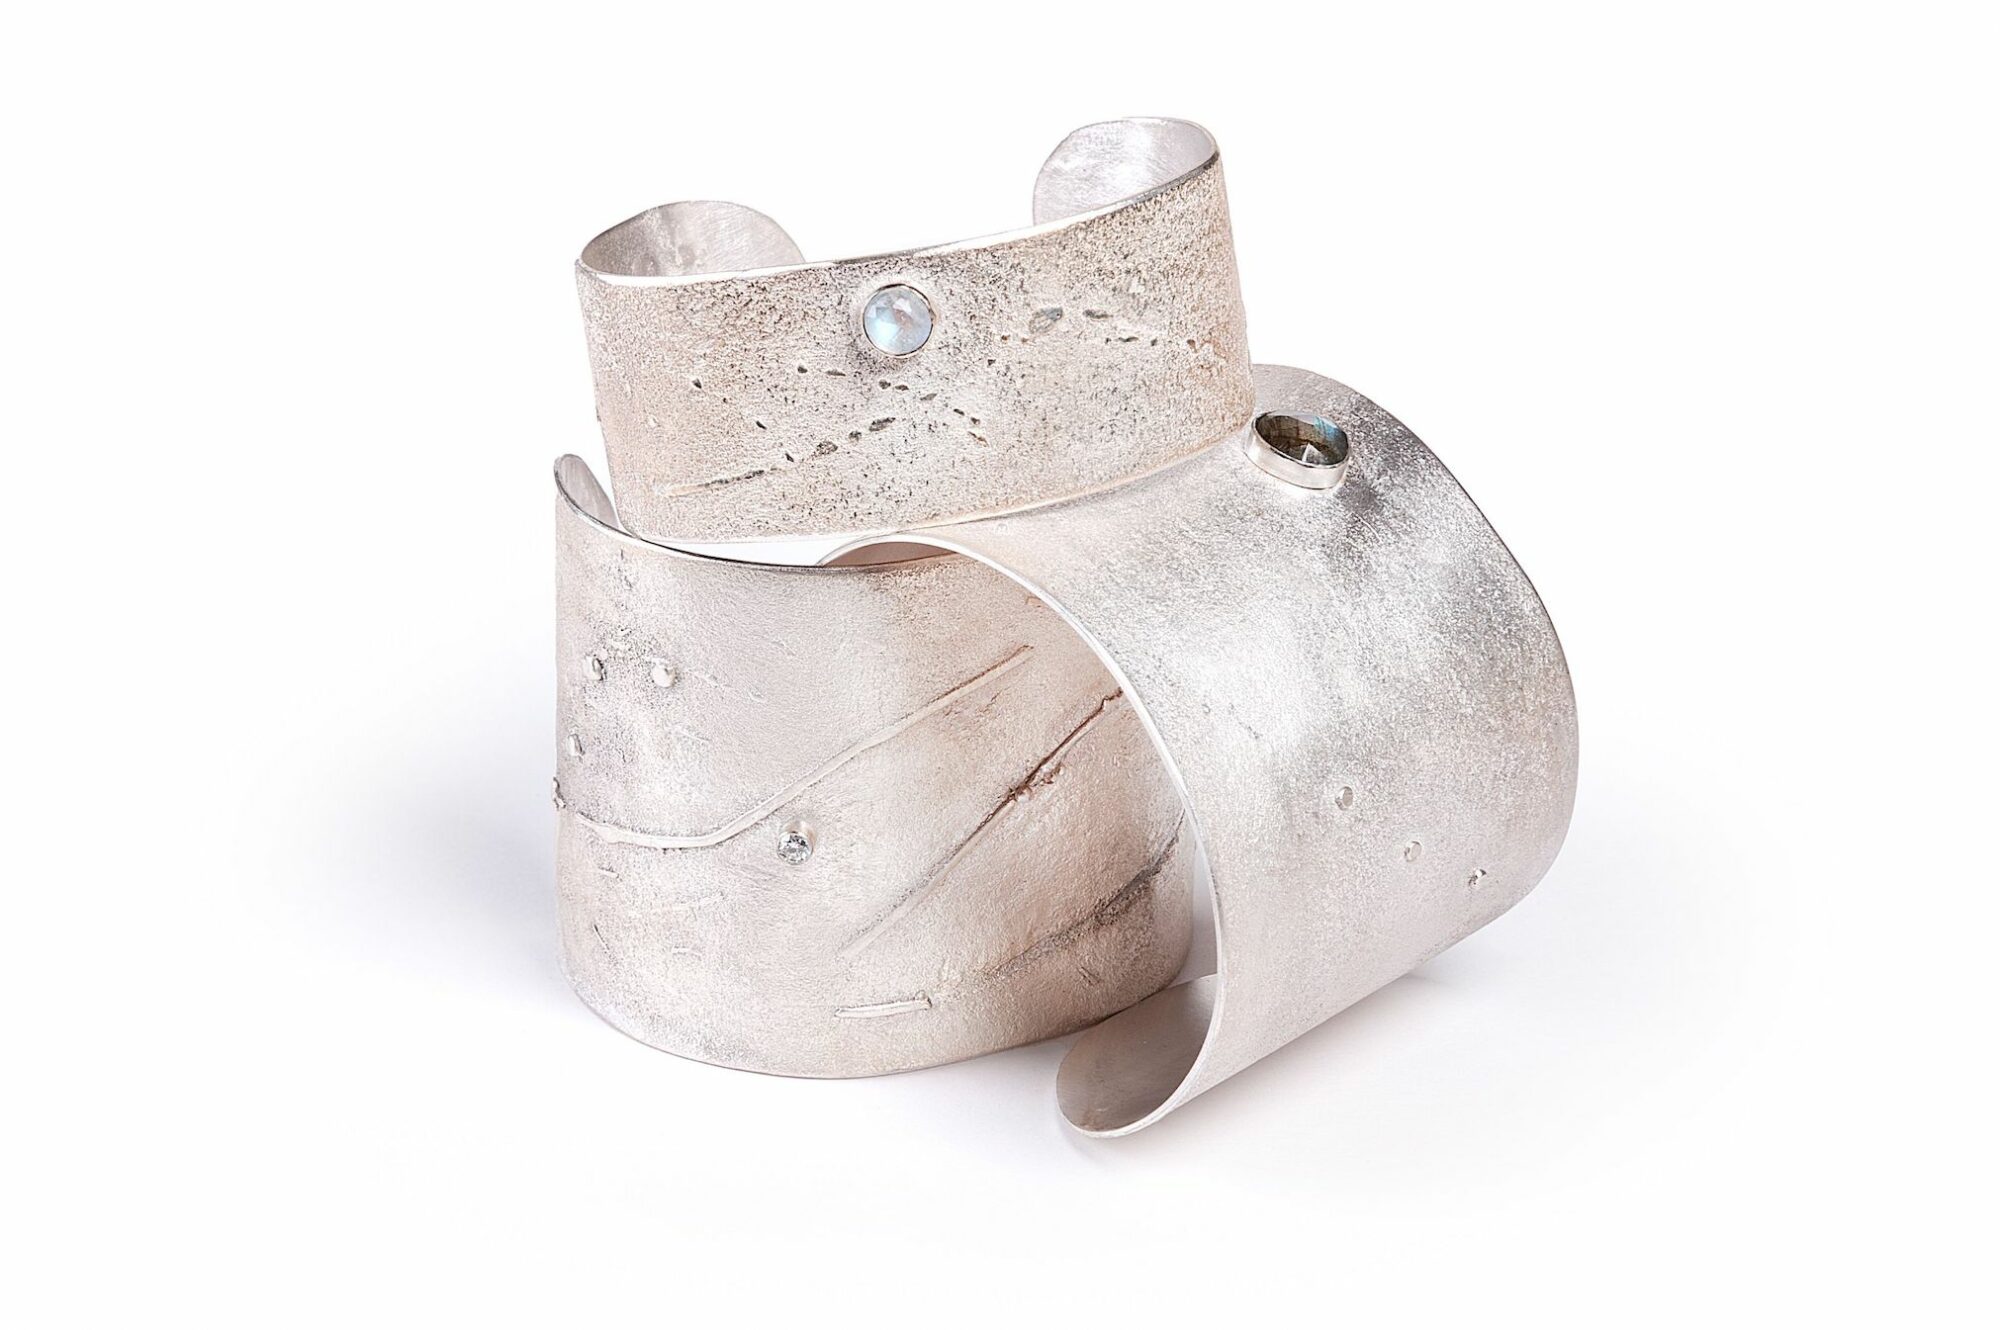 Fine Silver Fused Cuff Bracelets, by Bourne Jewelry, Studio 321